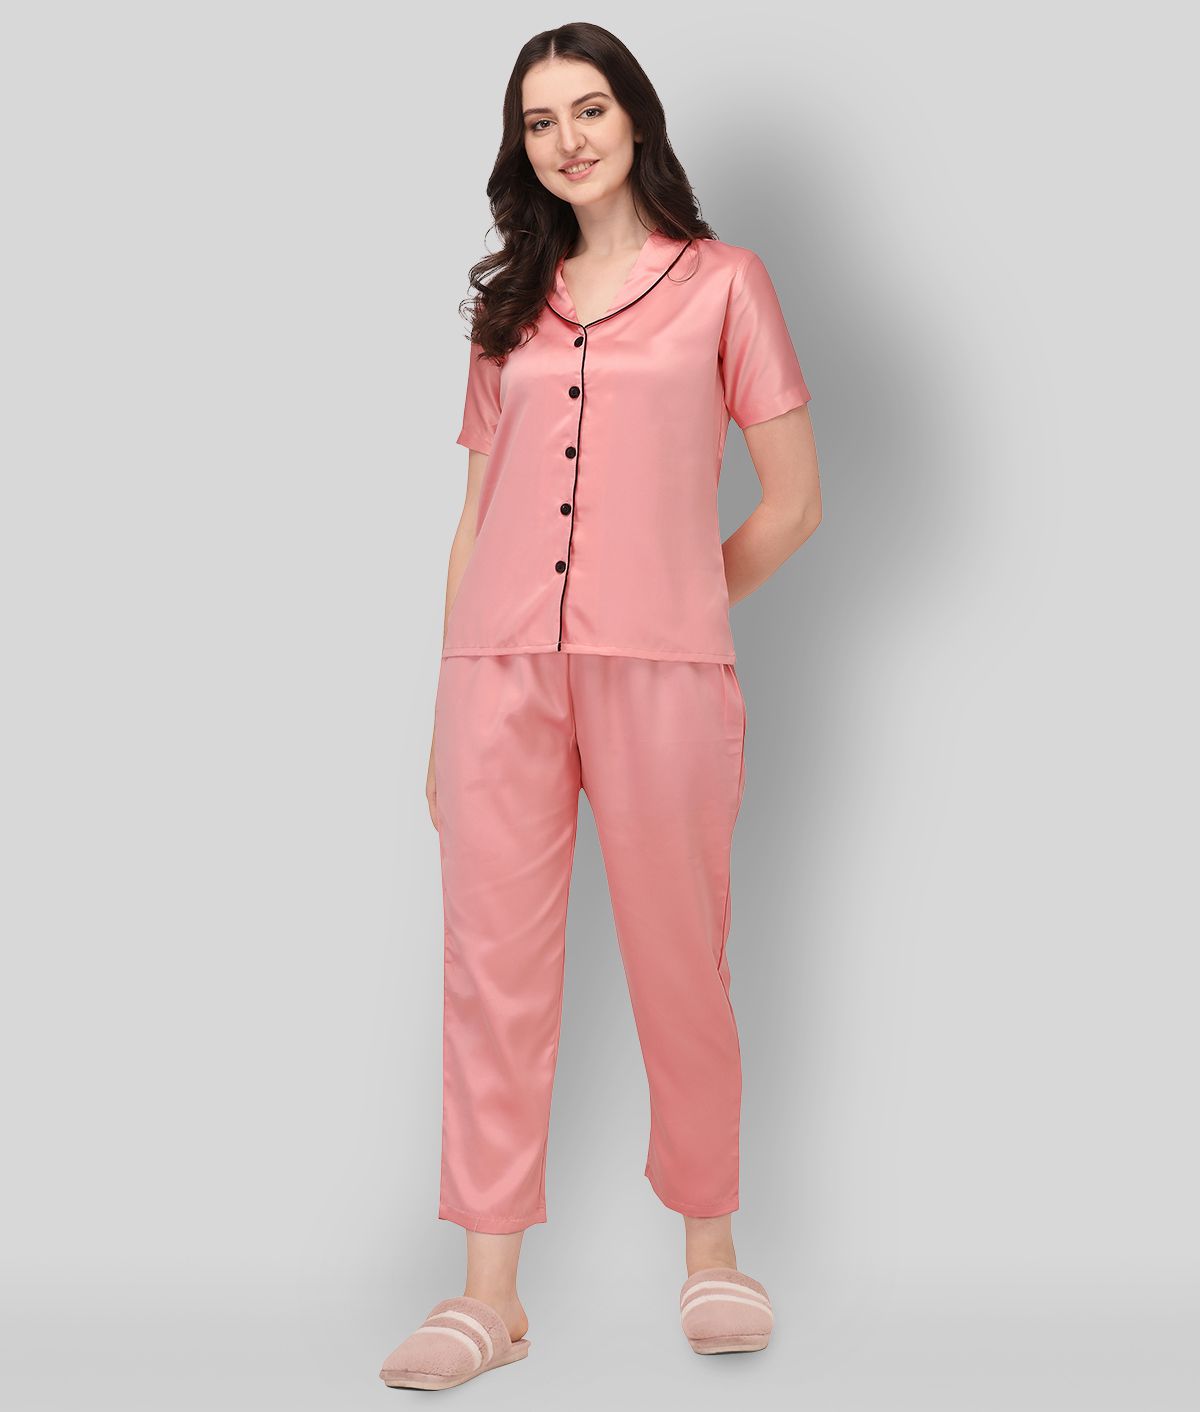     			Smarty Pants - Peach Silk Women's Nightwear Nightsuit Sets ( Pack of 1 )